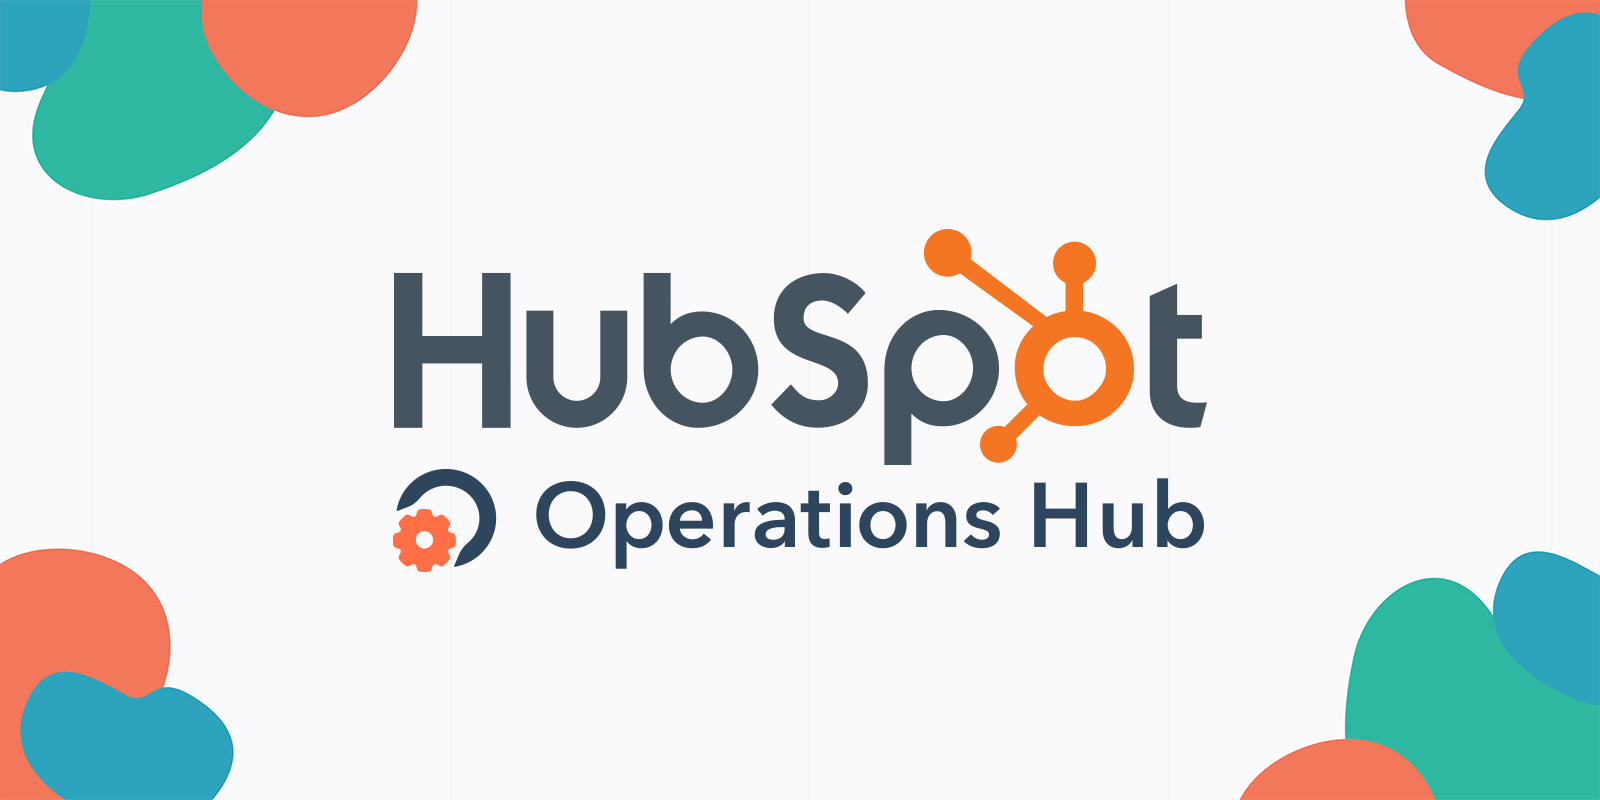 hubspot-operations-hub